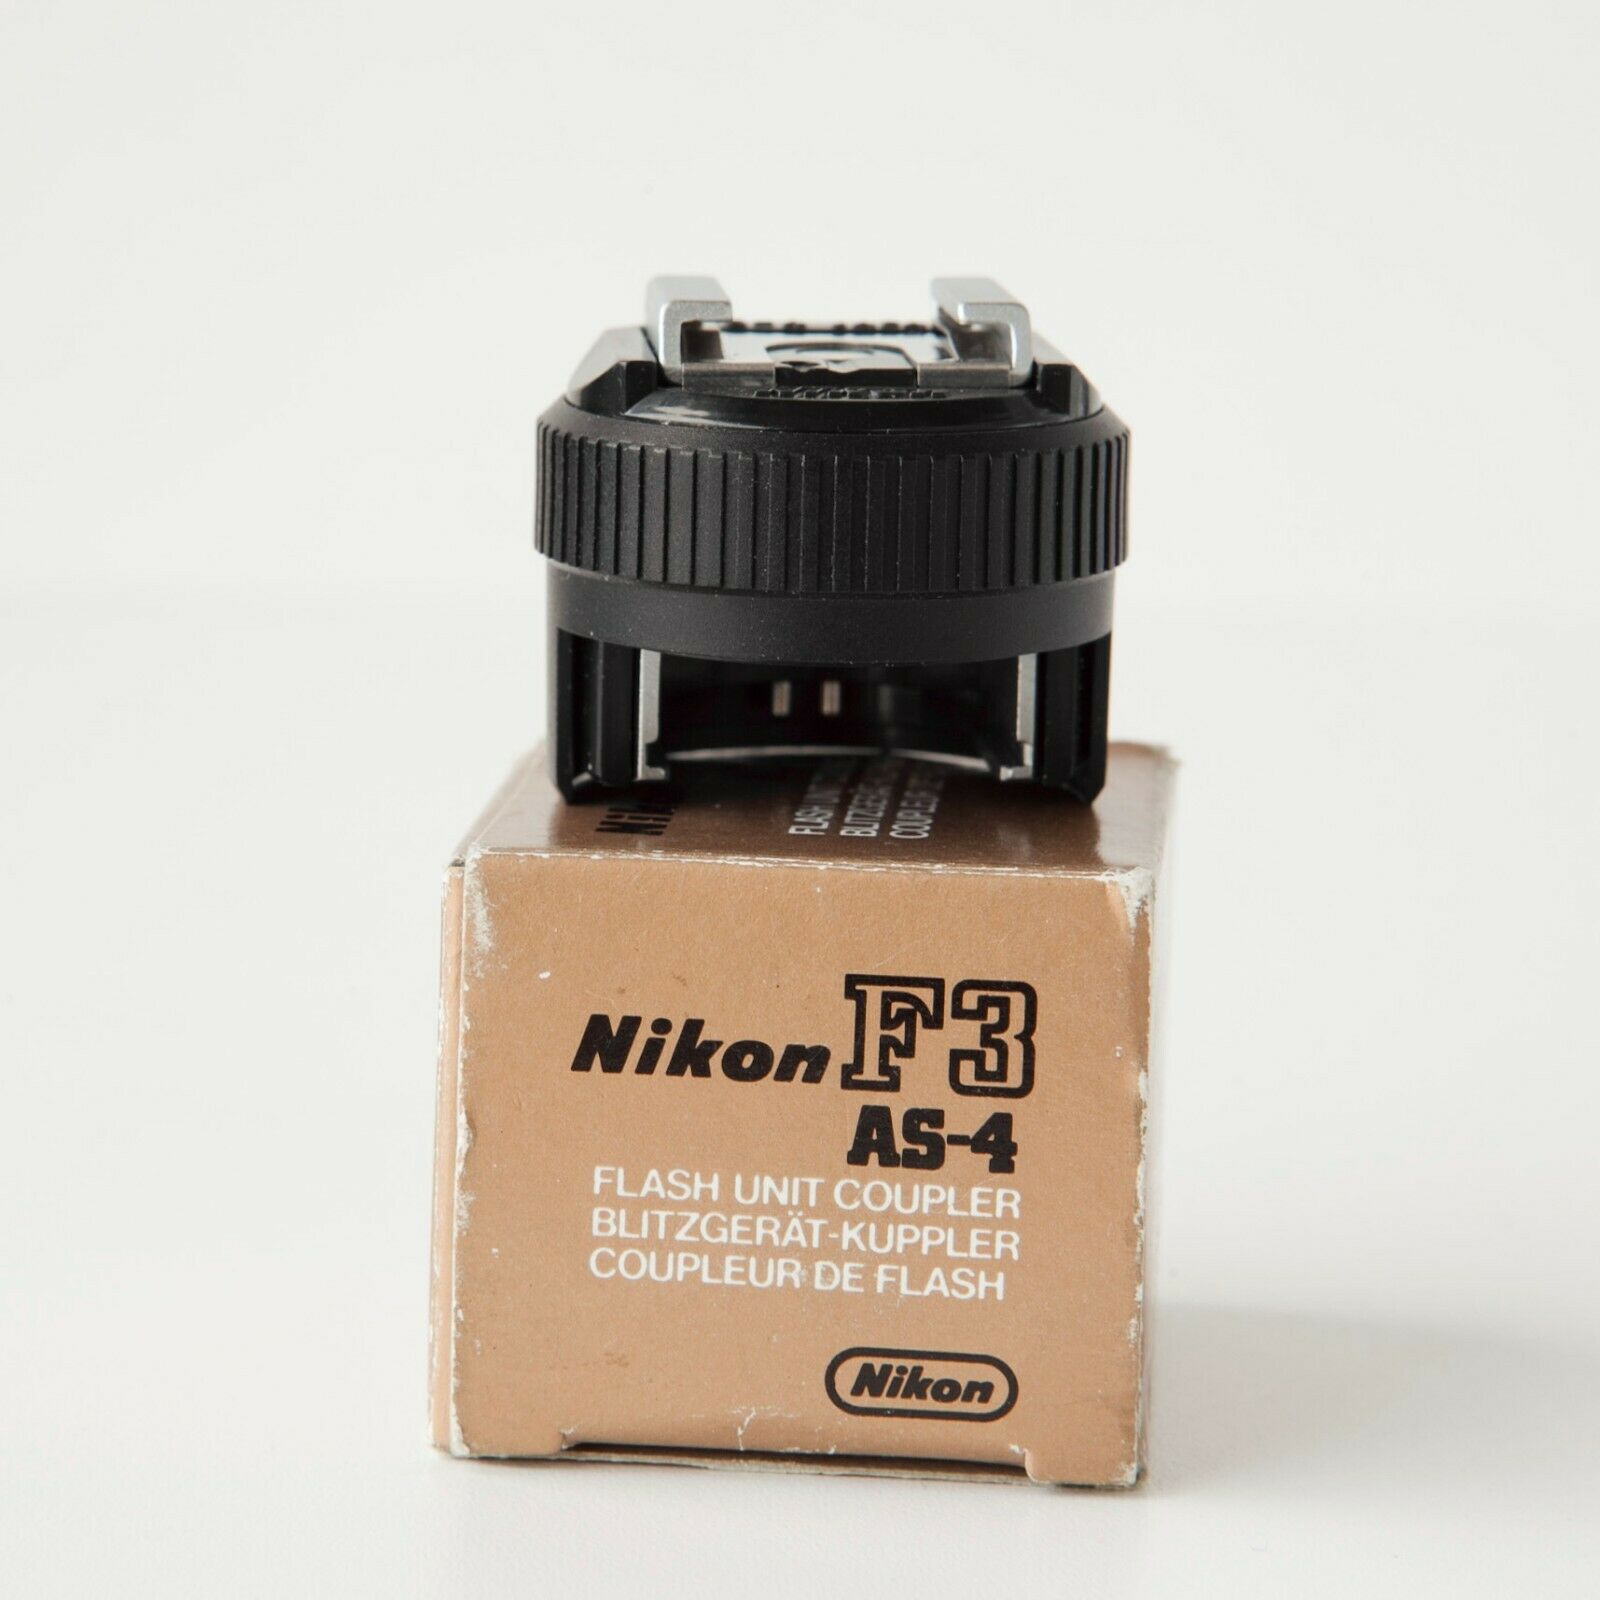 Nikon F3 As-4 Flash Unit Coupler